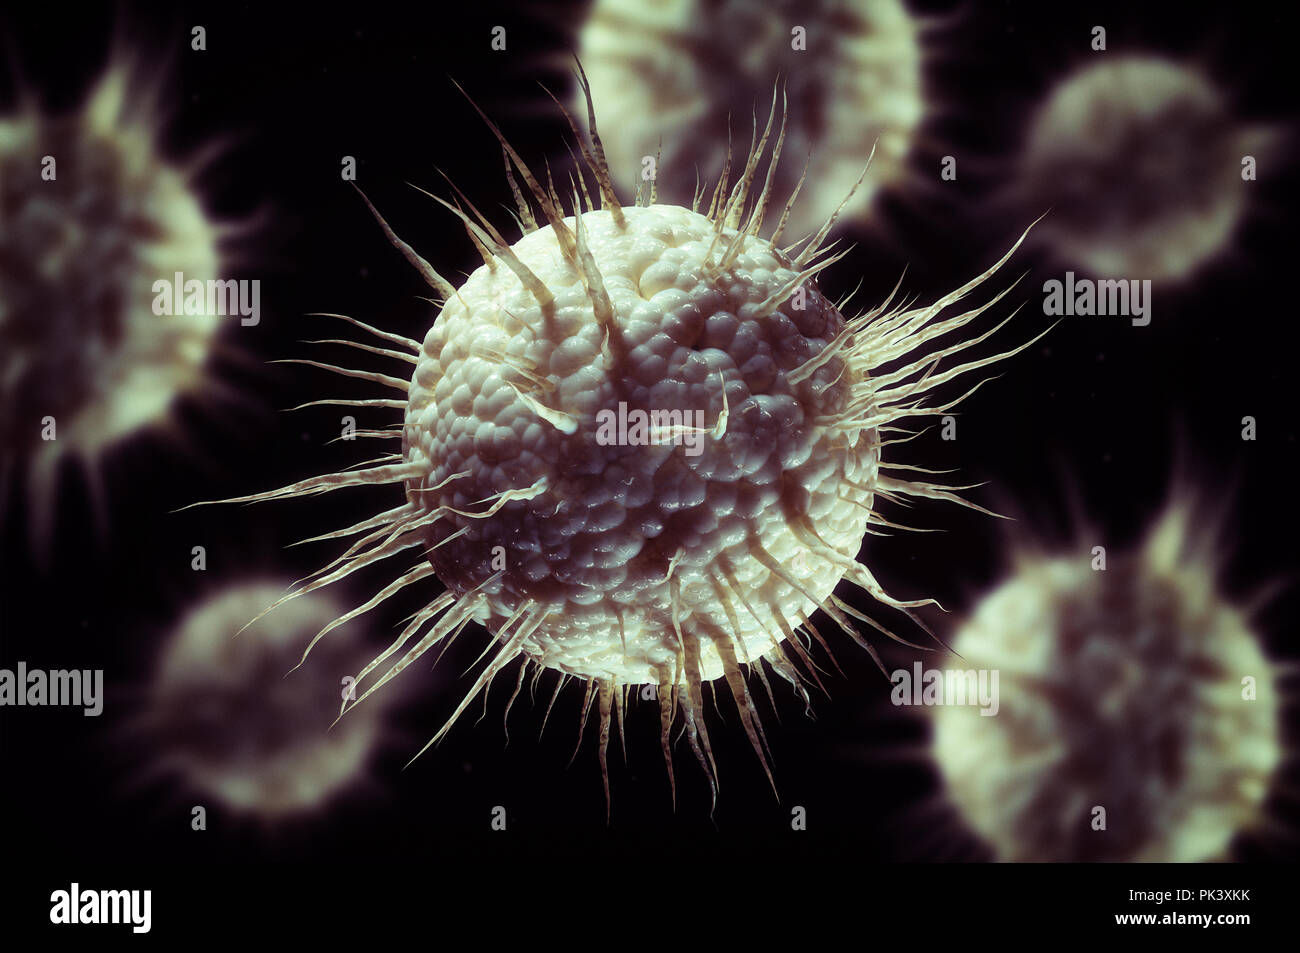 Virus cells High resolution image Stock Photo